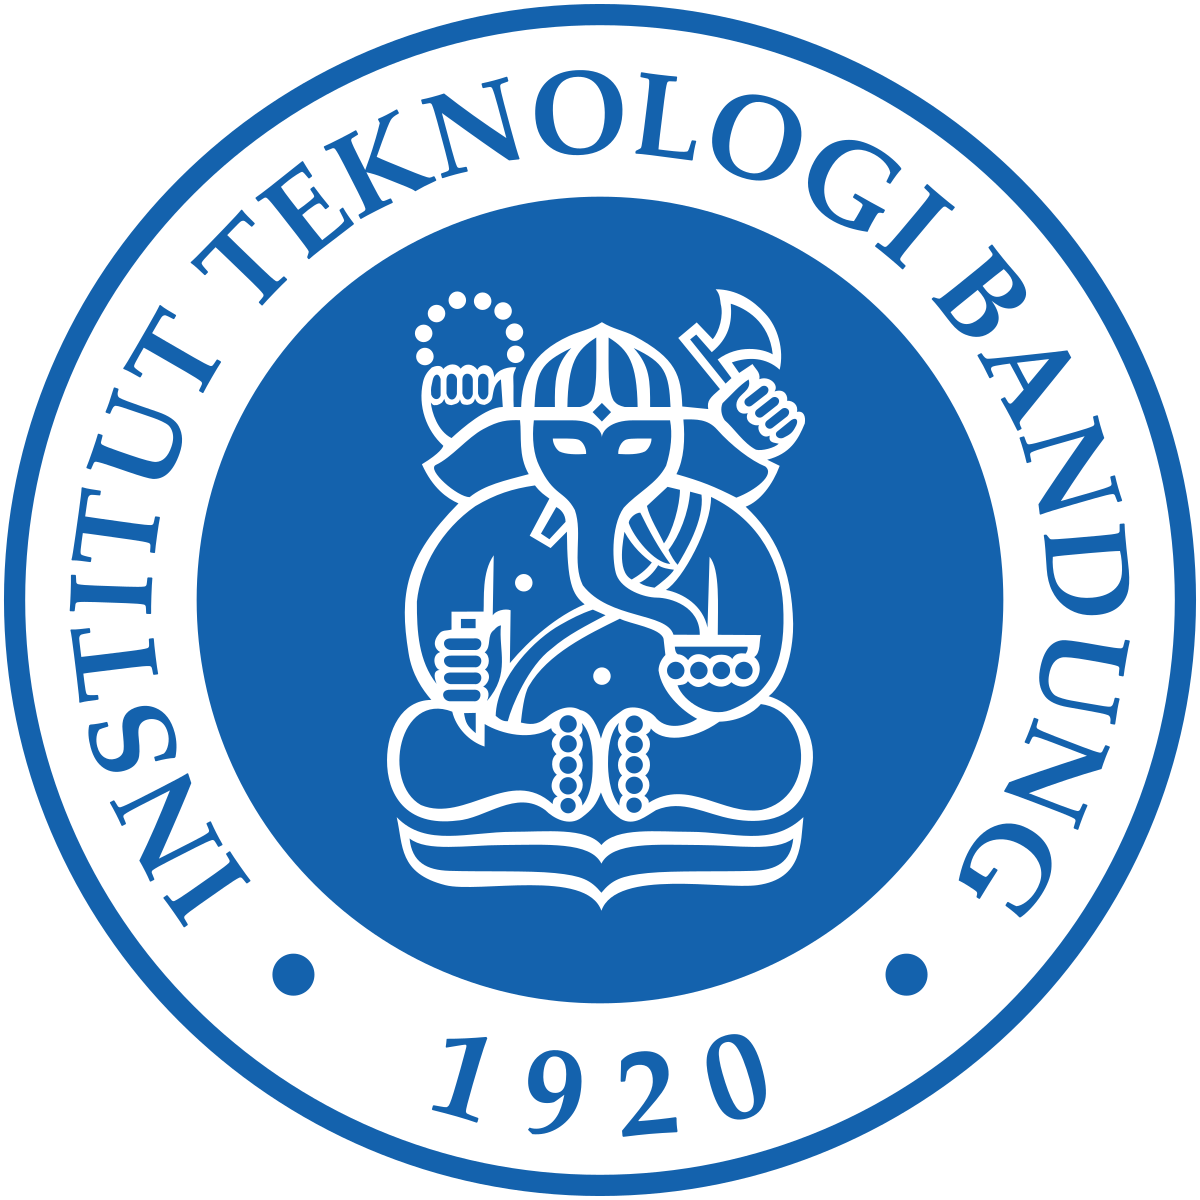 1200px-Institut_Teknologi_Bandung_logo.svg